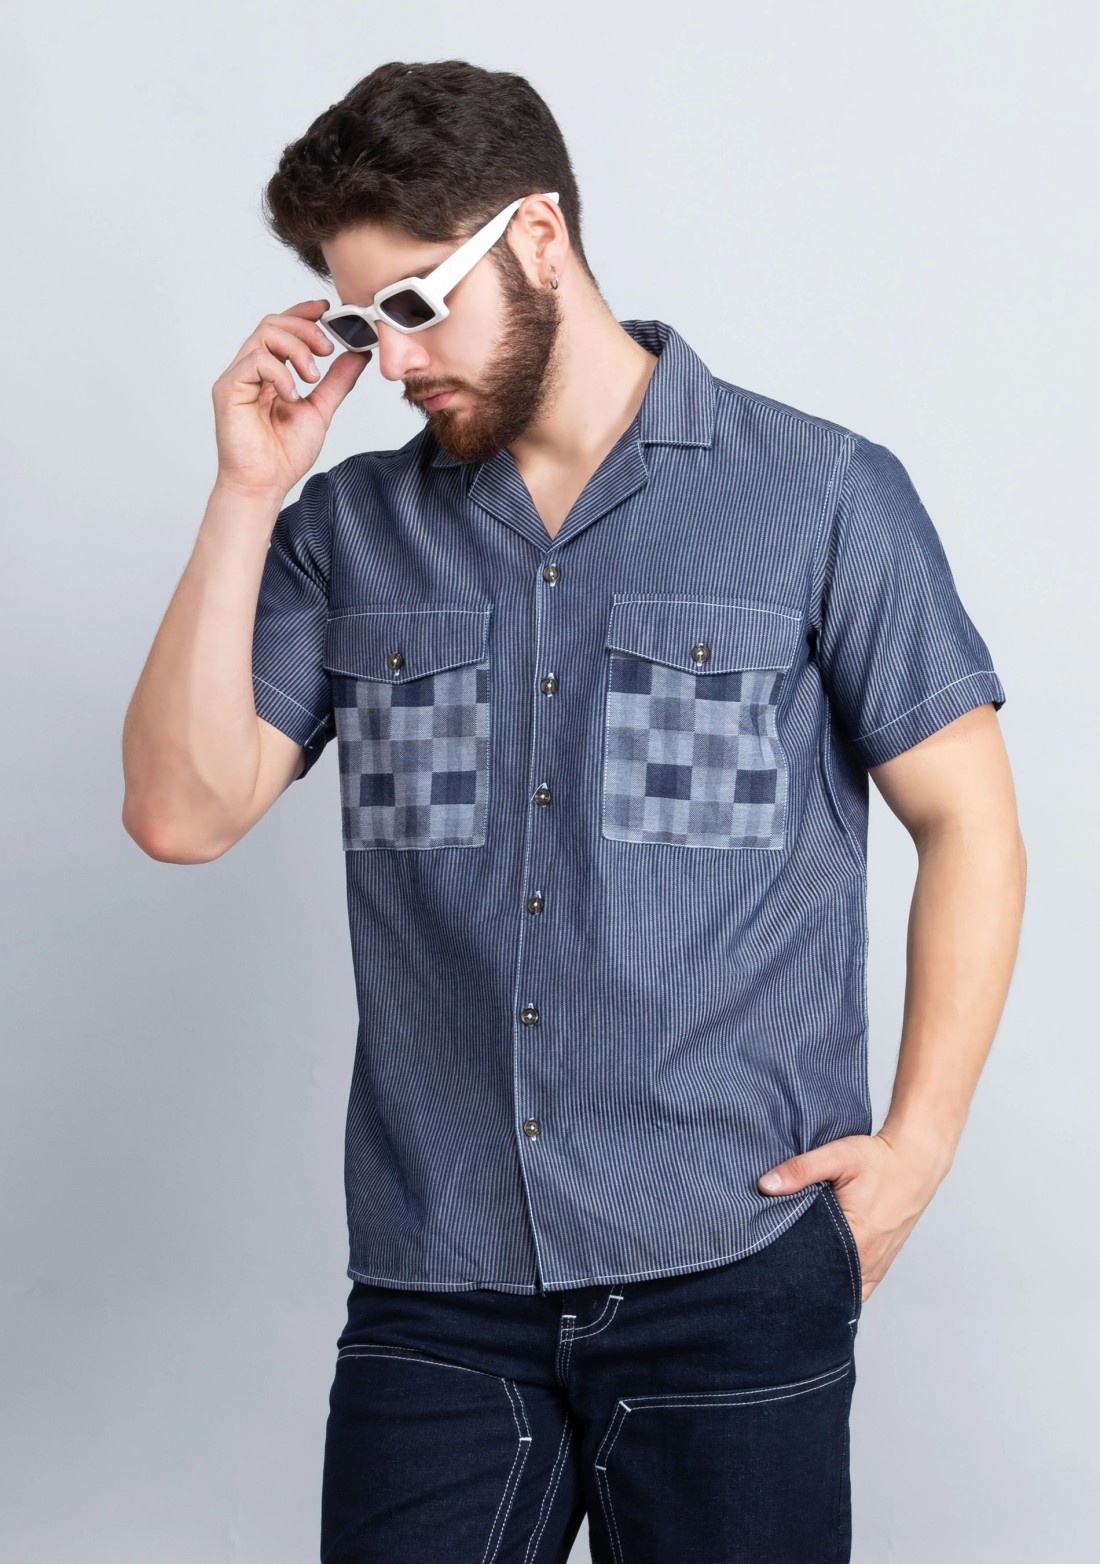 Summer Denim Denim Shirts For Men For Men Cotton Plaid Smart Short Sleeve  Cargo Dress CLOTHES In 4XL From Tinypari, $30.67 | DHgate.Com